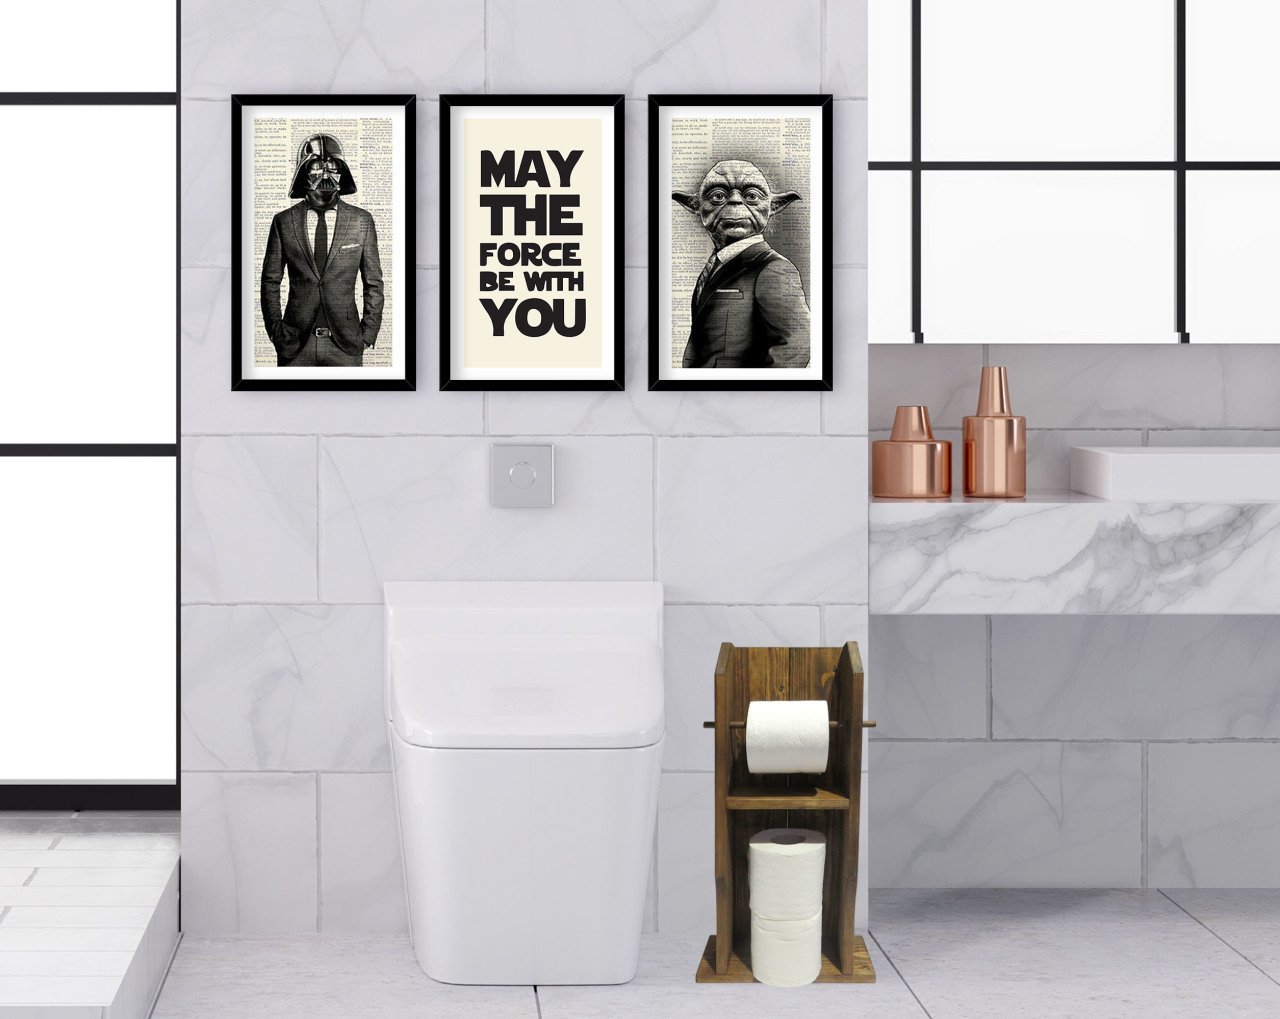 BK Home Doğal Masif Ahşap Tuvalet Kağıtlığı ve Dekoratif 3’lü Ahşap Siyah Çerçeveli Tablo-8